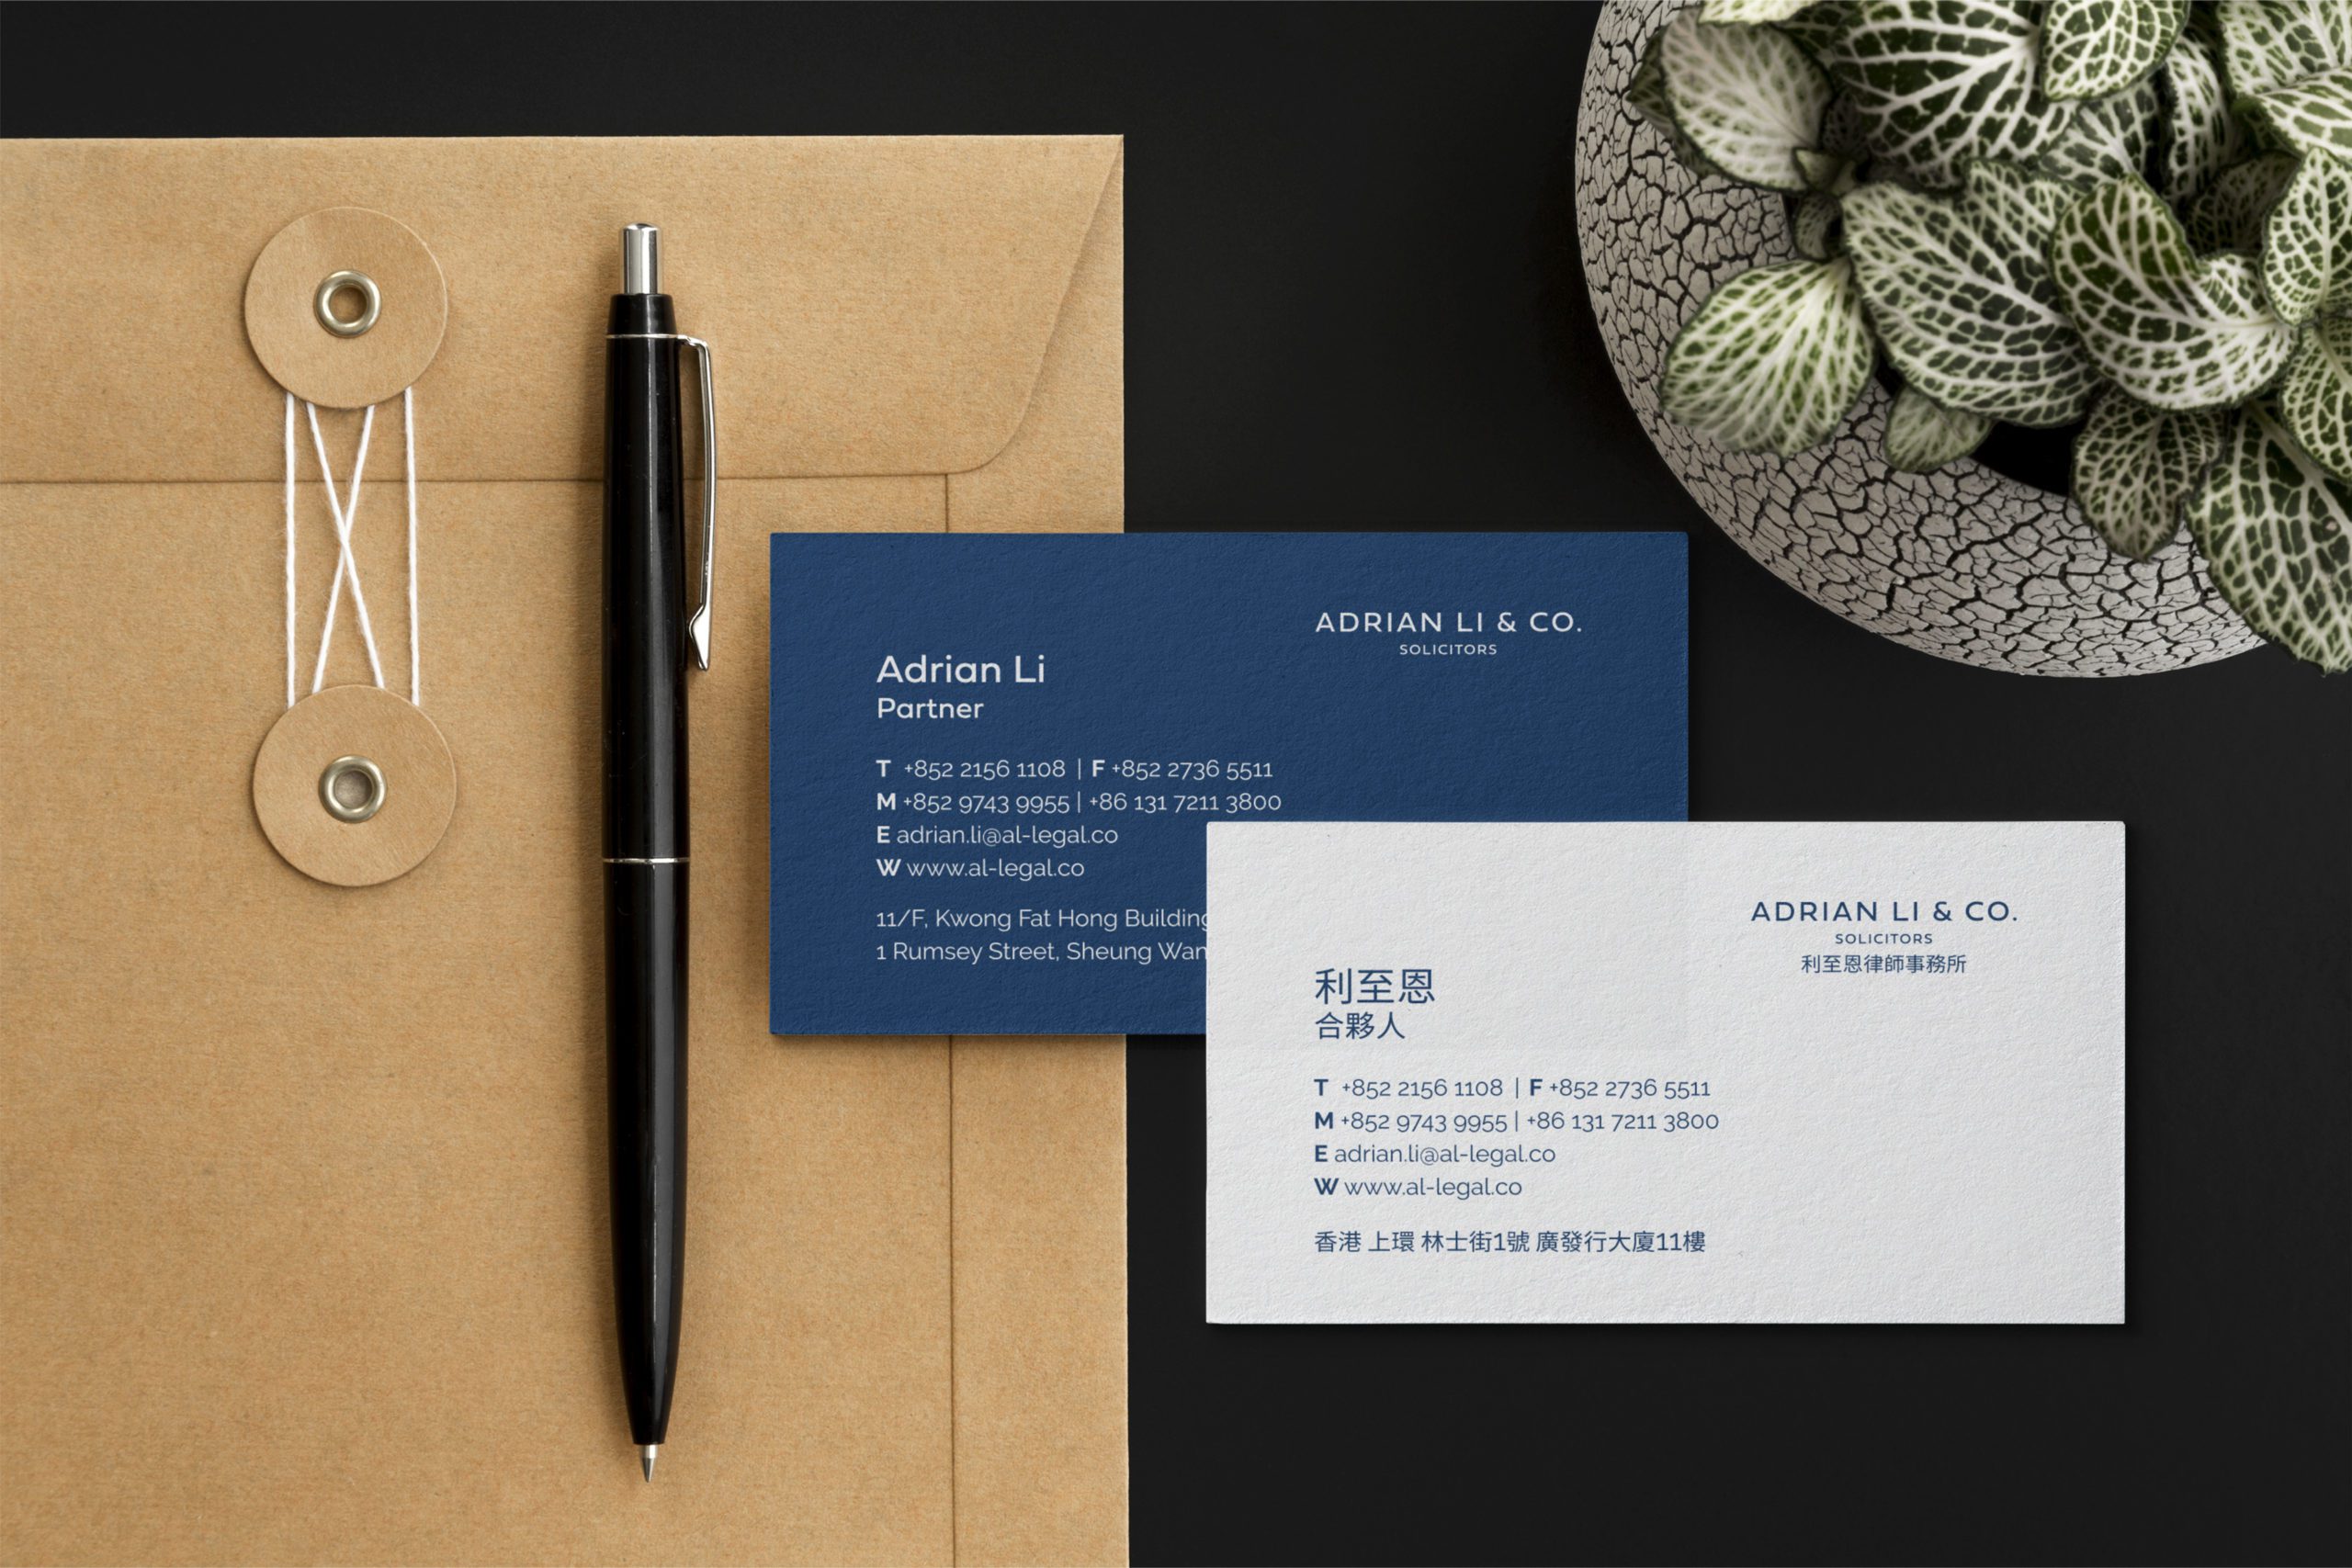 Adrian Li & Co. Solicitors business card design